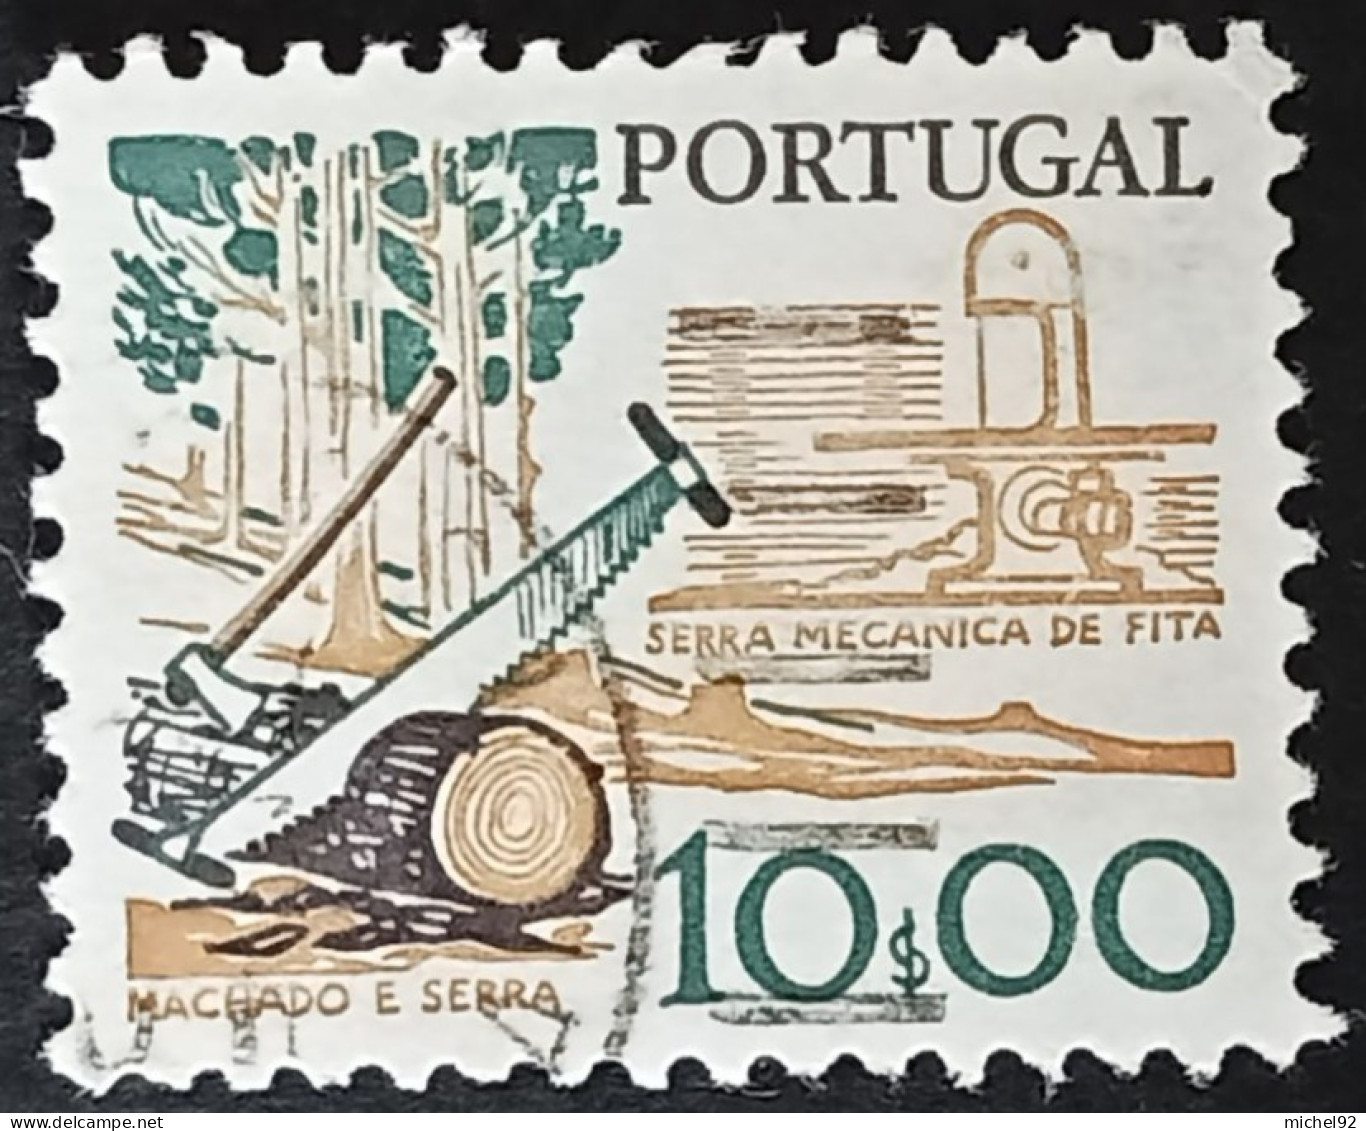 Portugal 1979 - YT N°1410 - Oblitéré - Usati